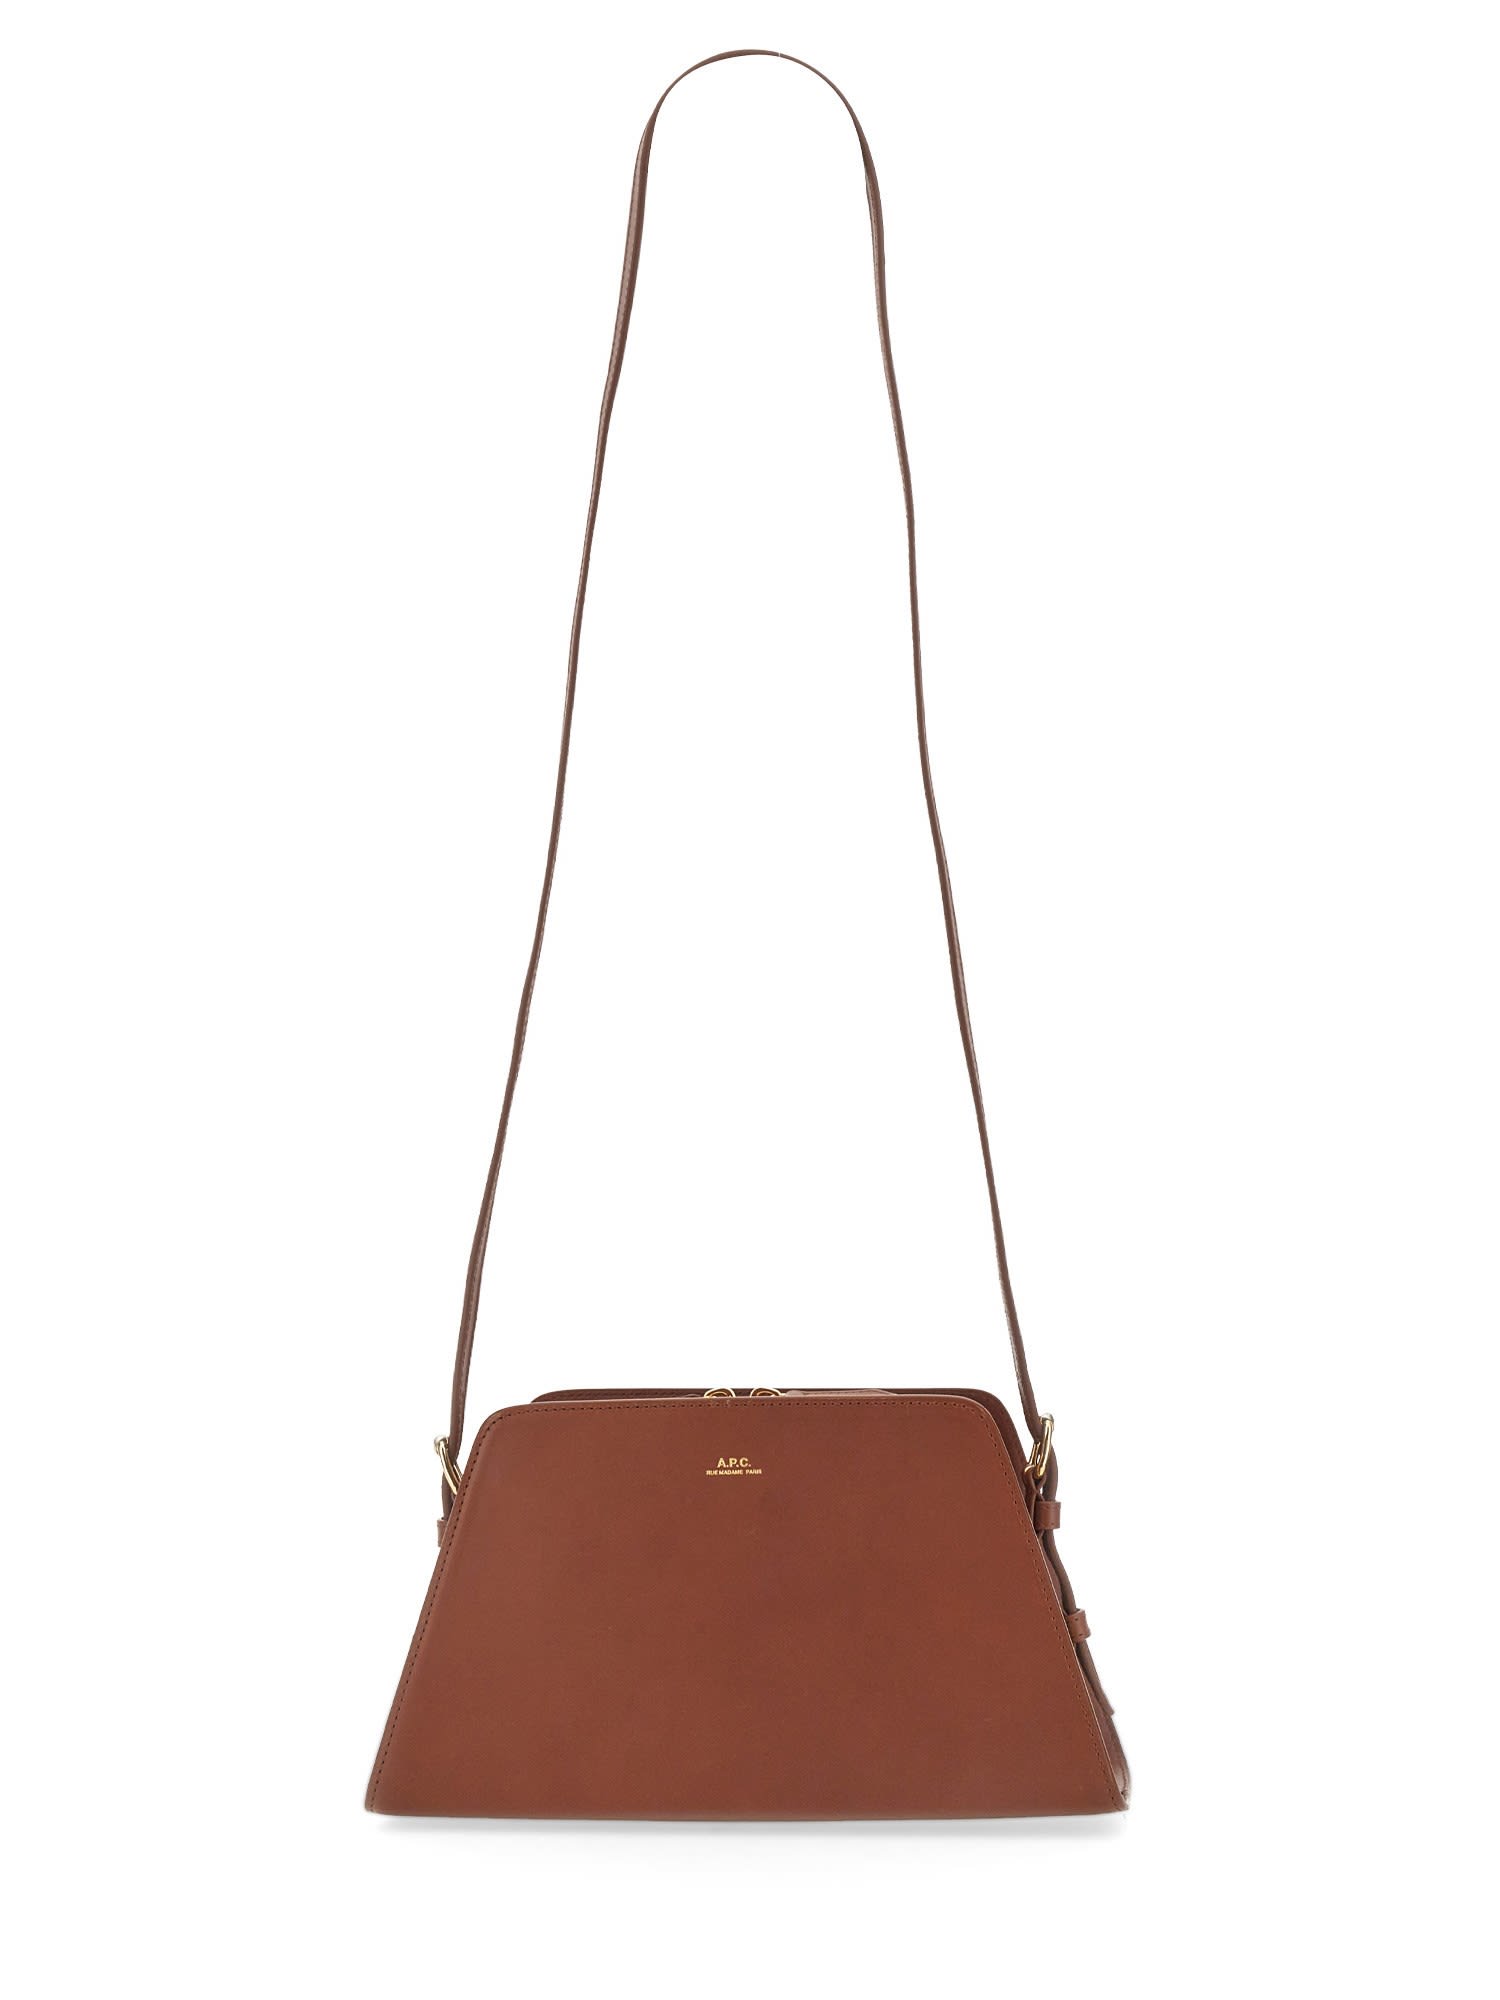 Apc Brown Small Tetra Bag In Marrone